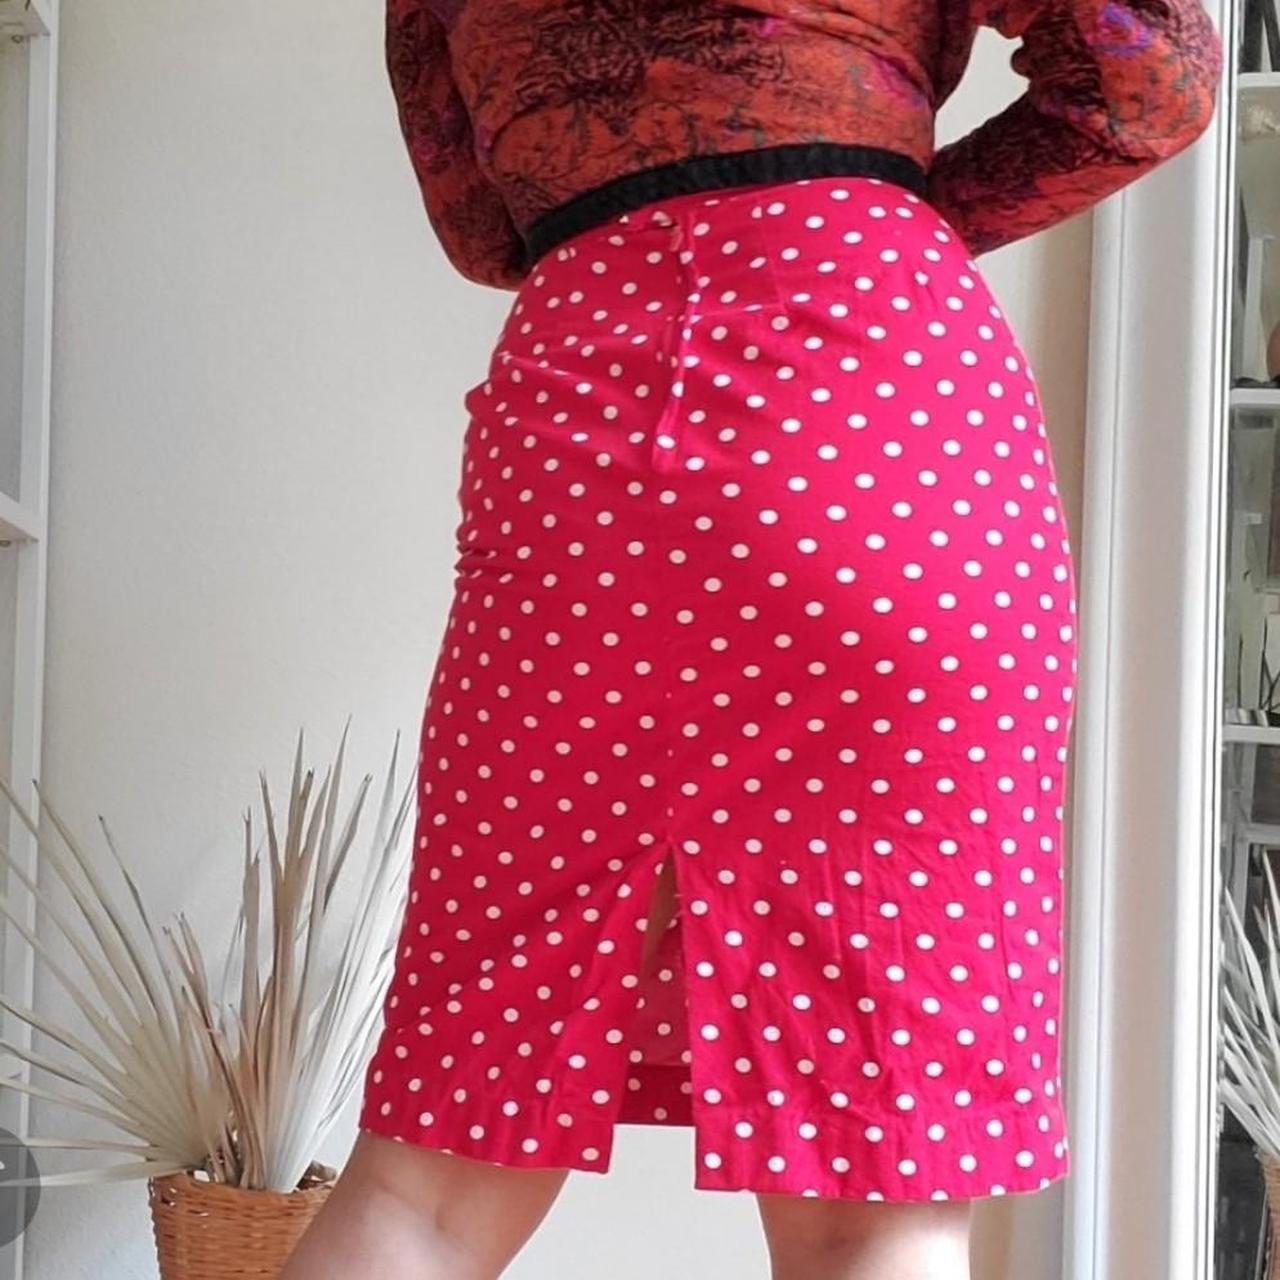 Product Image 3 - Vintage Pencil Skirt 
Super cute